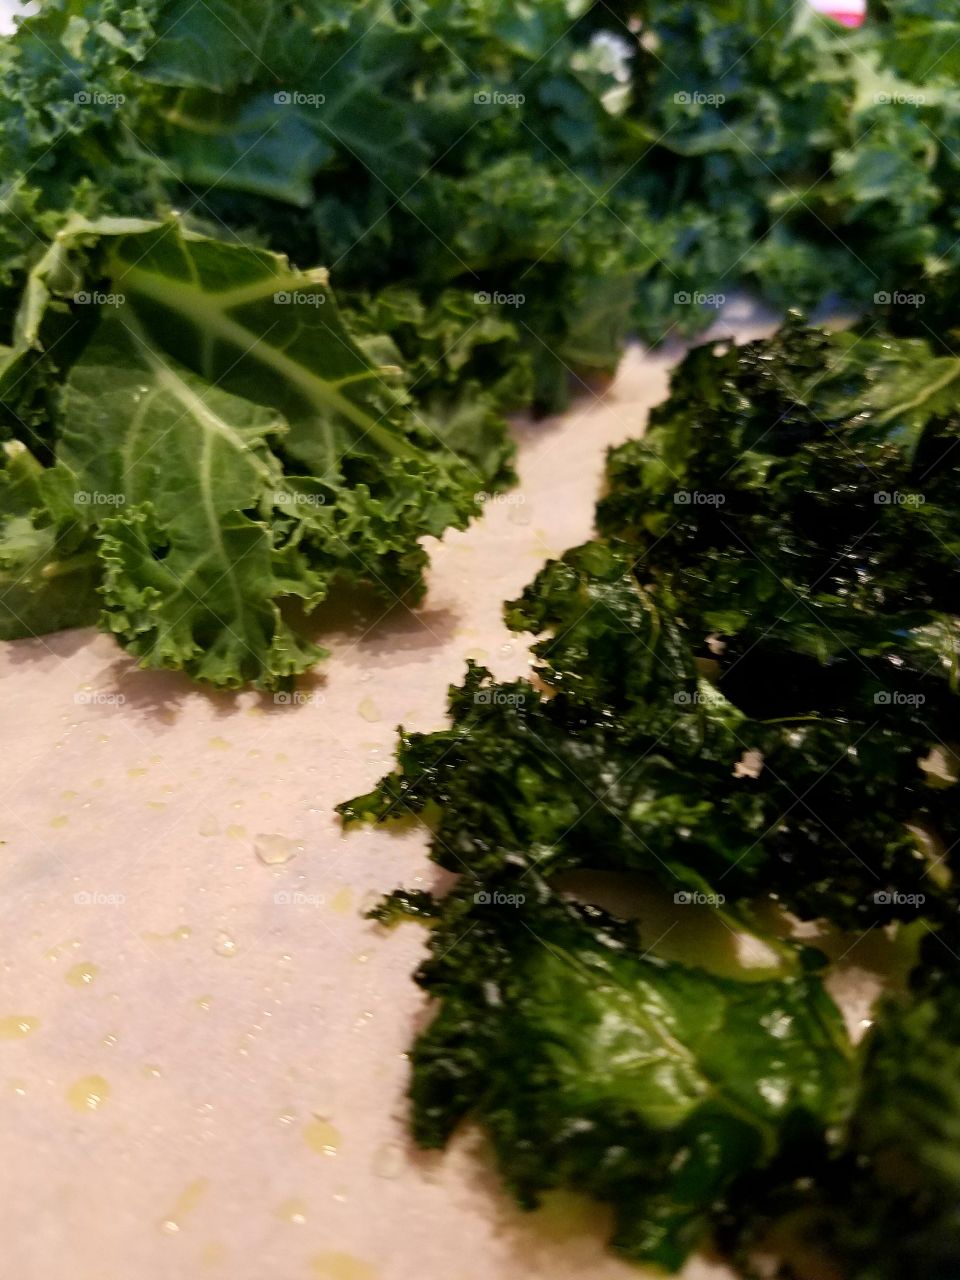 raw kale alongside baked kale crispy chips, health food.